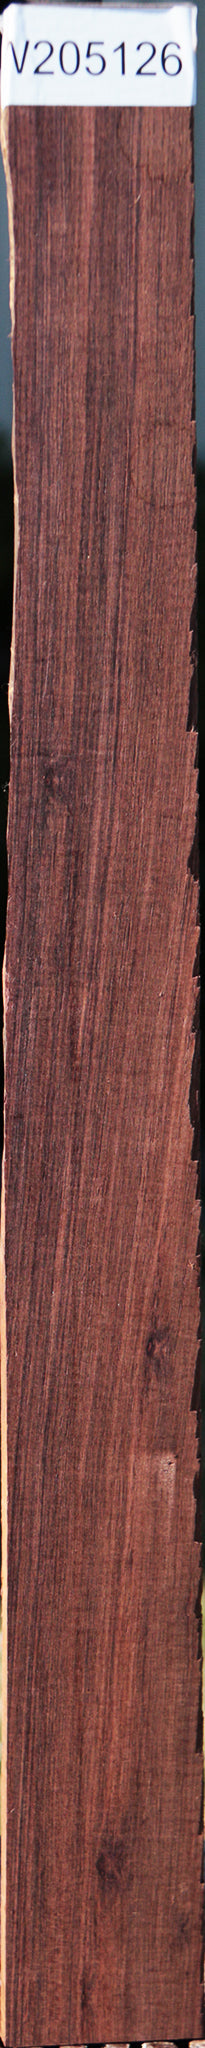 Quartersawn Madagascar Rosewood Micro Lumber